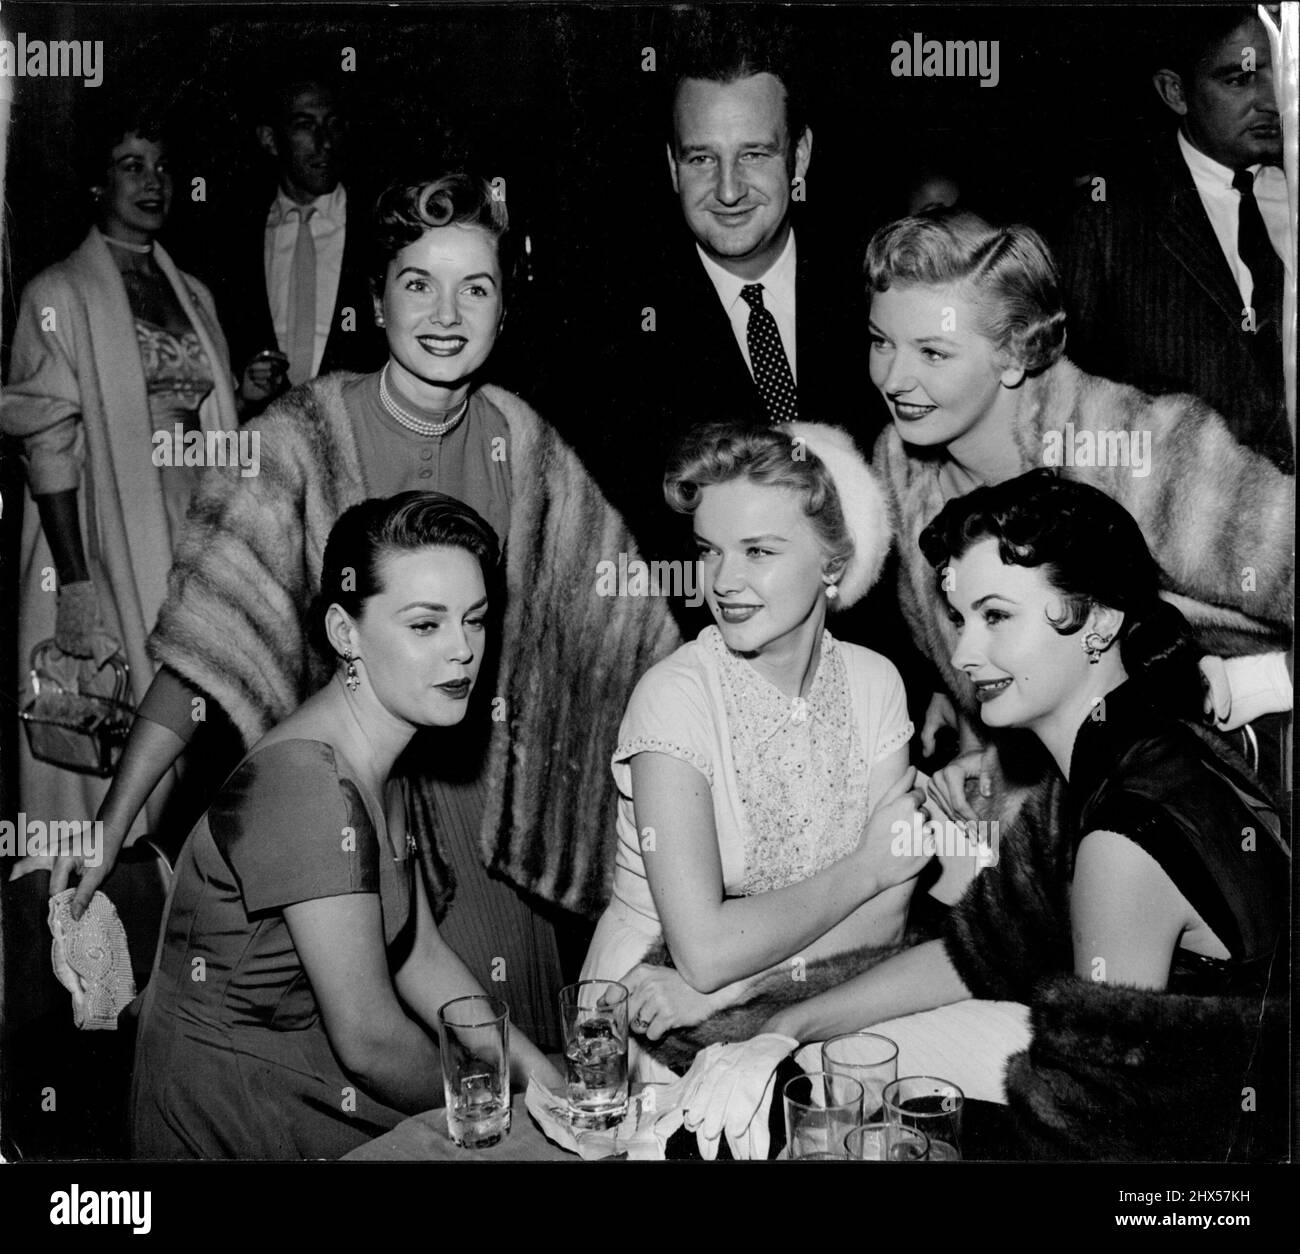 Debbie Reynolds, Benson Fond, Merry Anders, Peggy King, Ann Frances, Ruth Hampton. November 23, 1954. (Photo by Jay Scott). Stock Photo